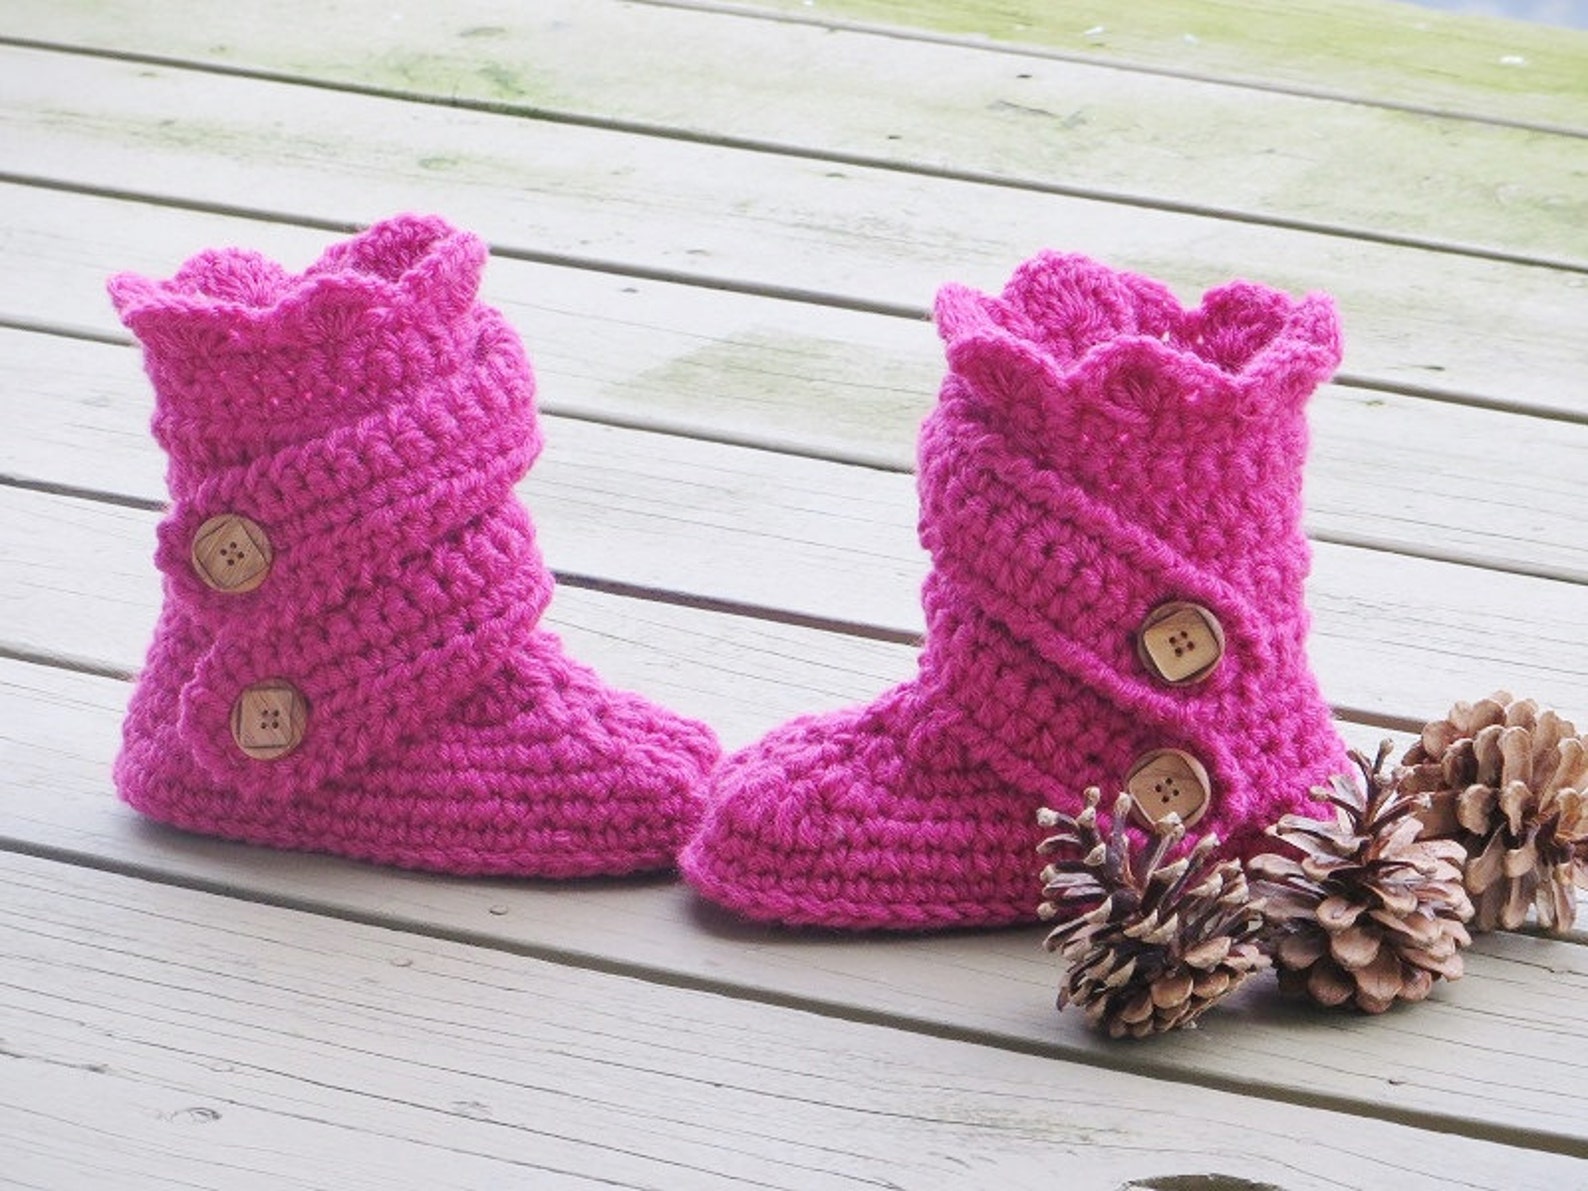 Crochet Pattern for Child's Boots Kids Boots Crochet - Etsy